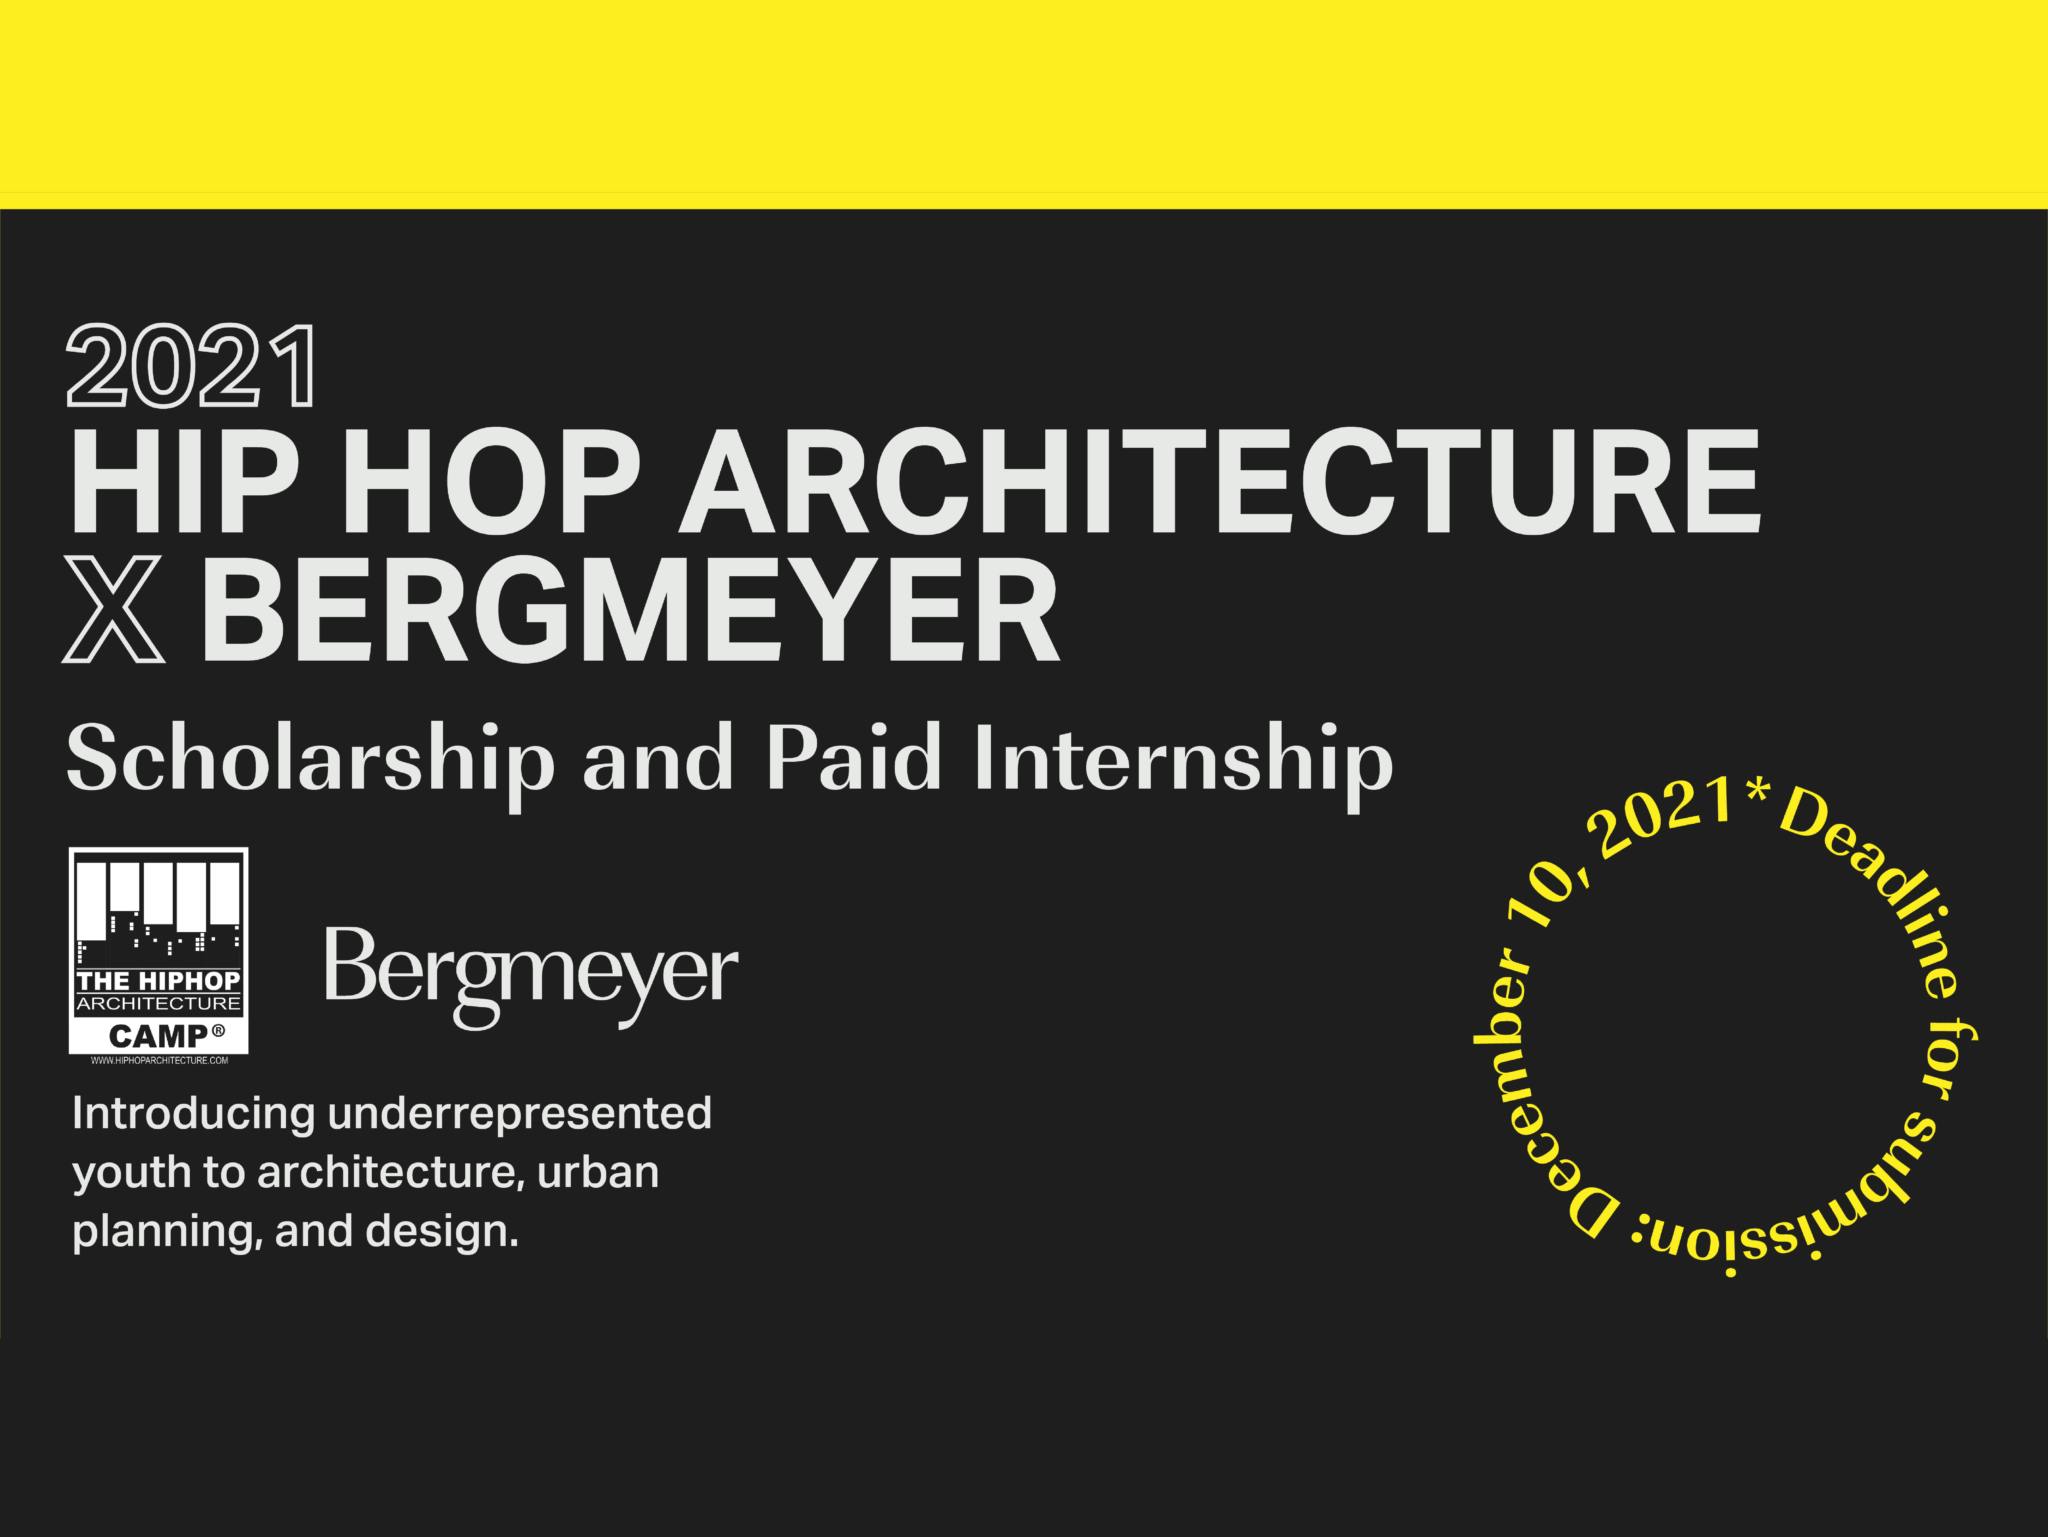 Hip Hop Architecture Camp x Bergmeyer Scholarship and Internship